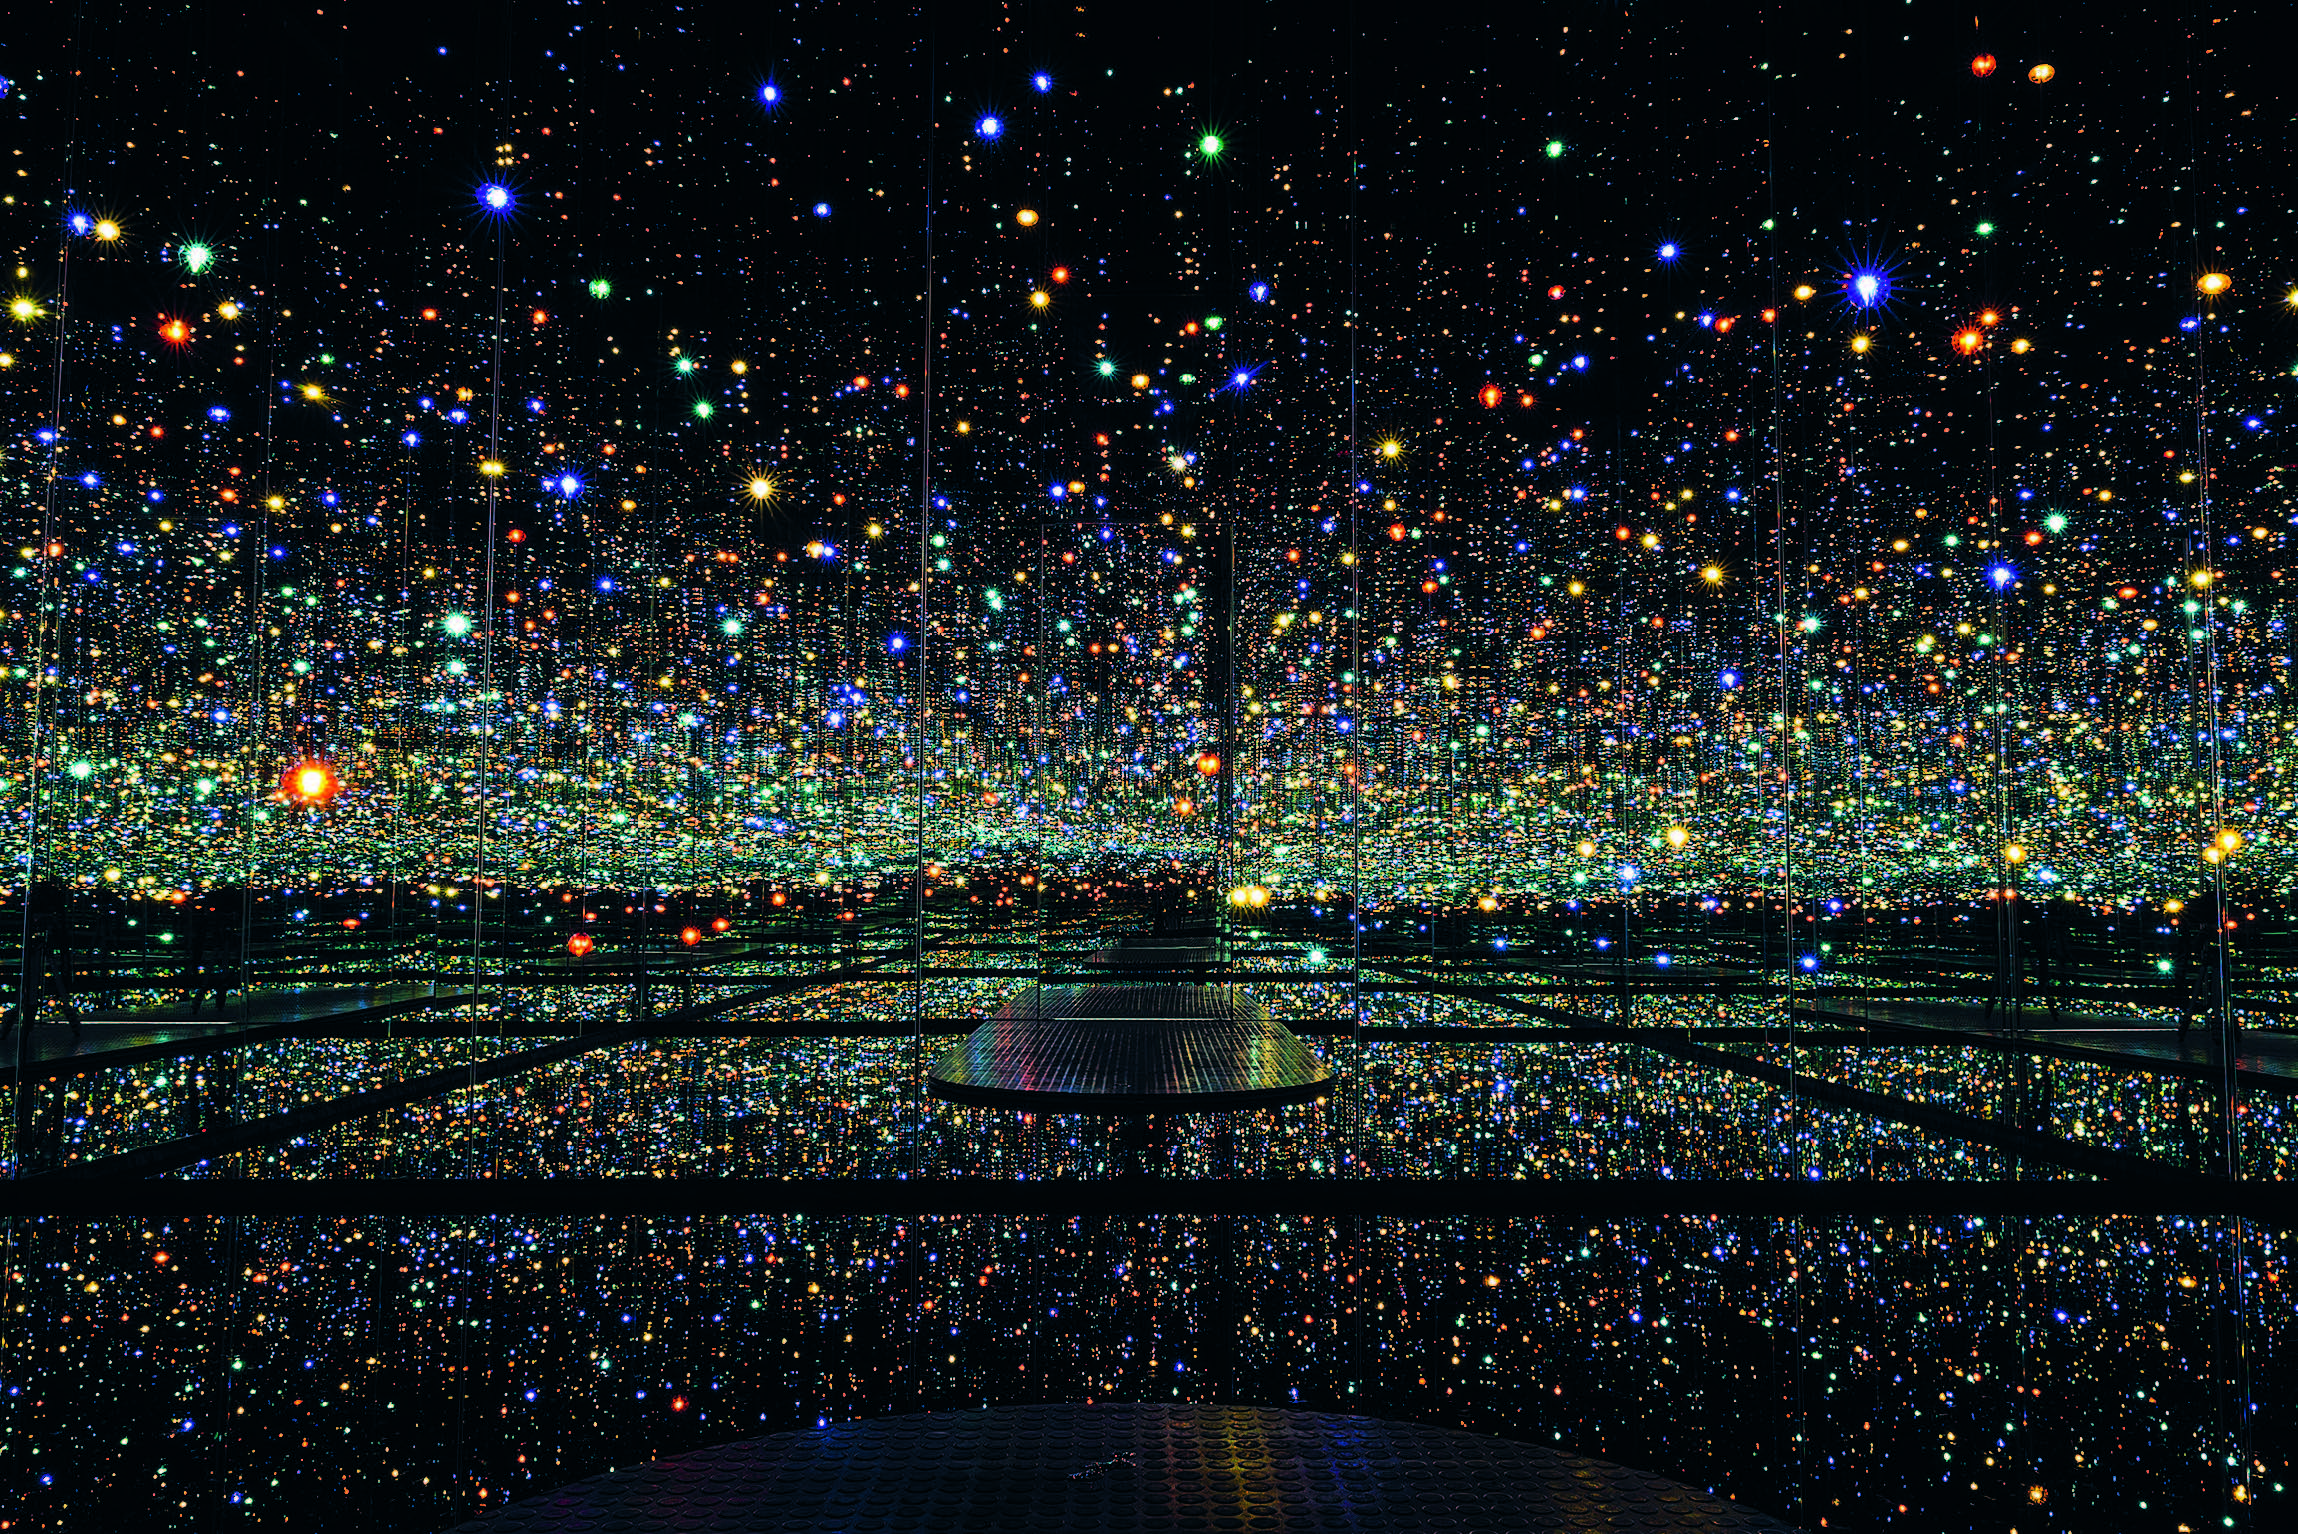 The Broad: Yayoi Kusama’s Infinity Mirrored Room